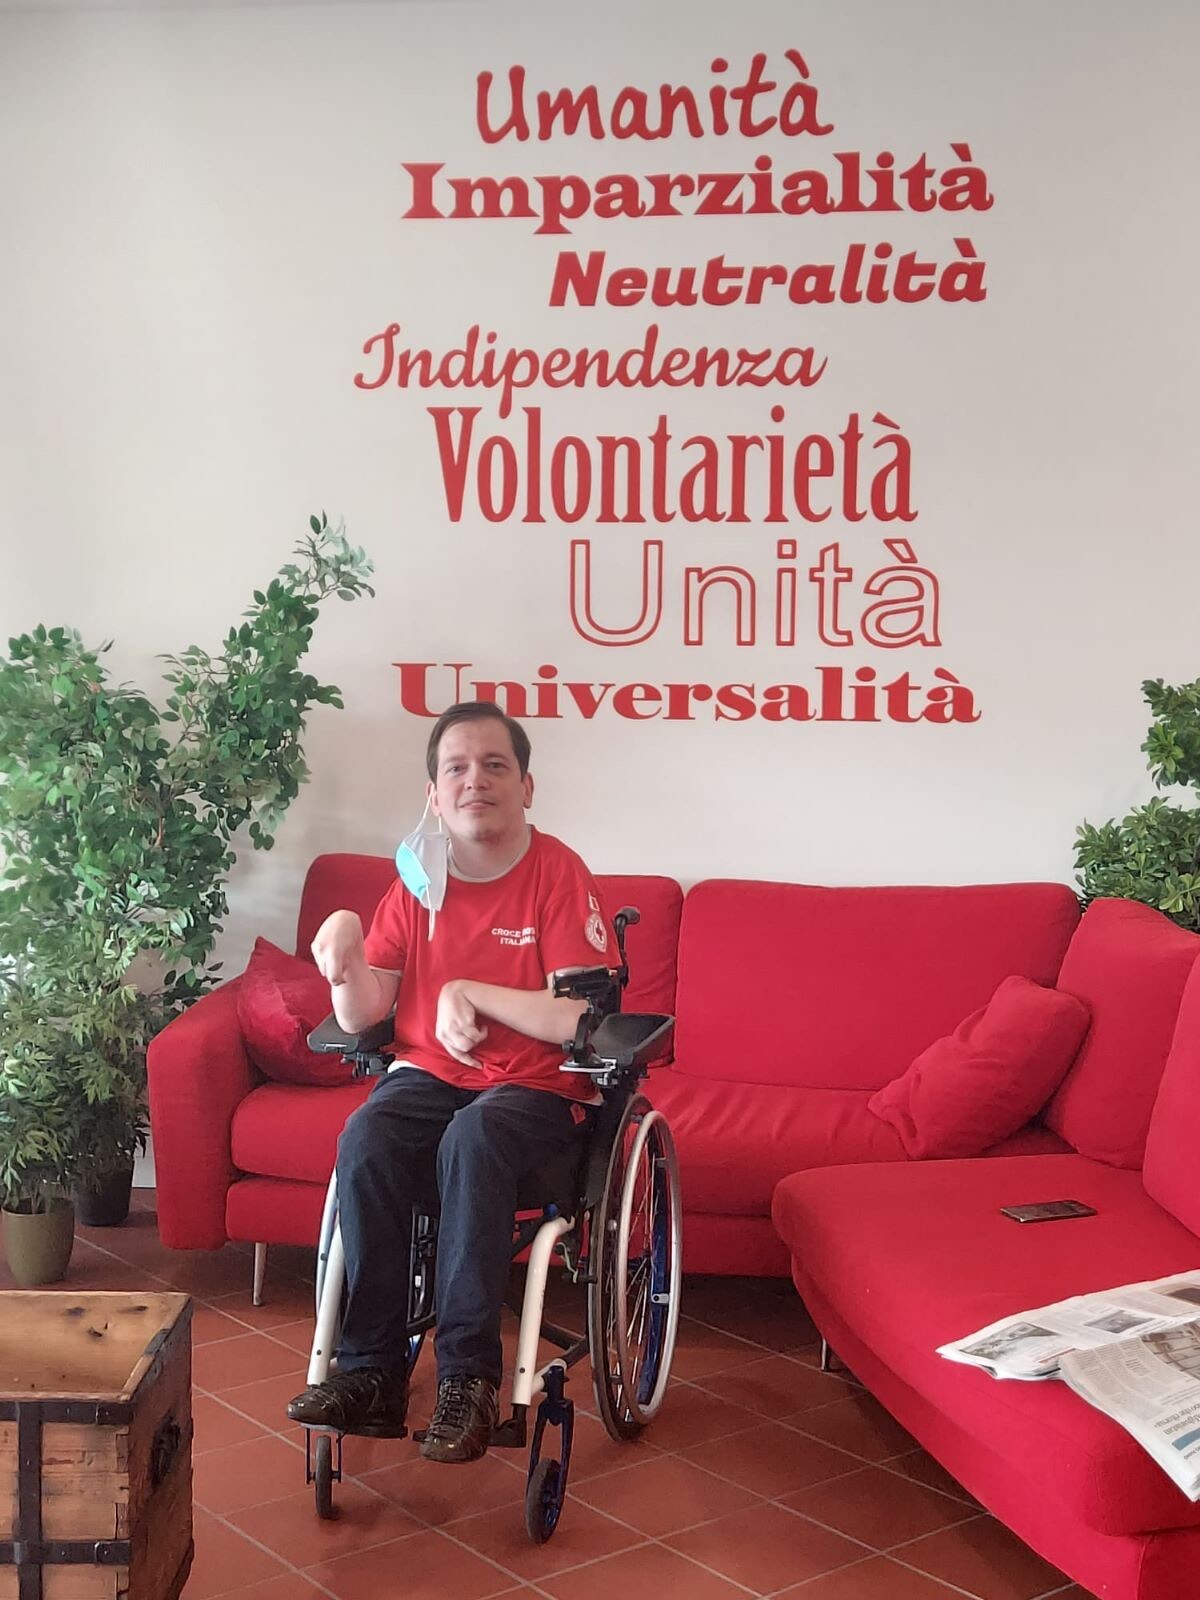  Intervista Stefano Pietta, web radio Steradiodj